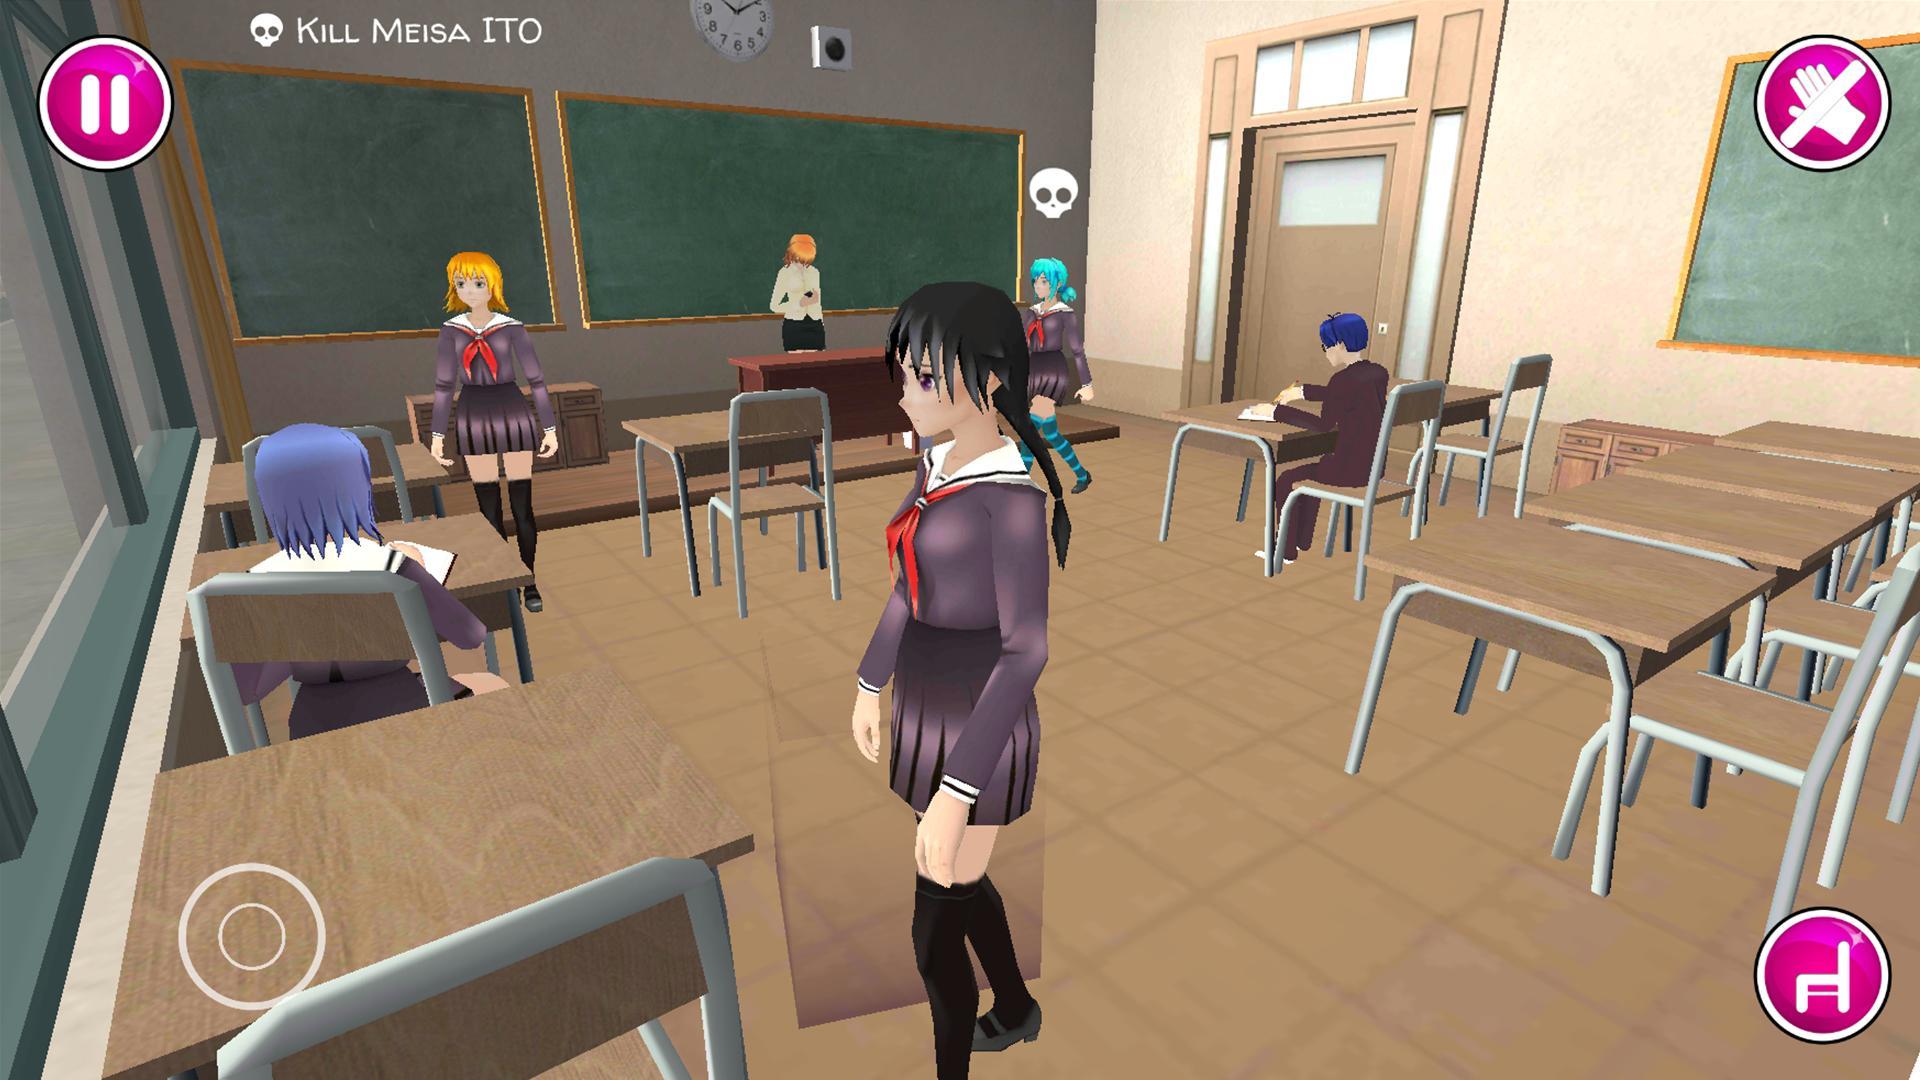 Anime Girl Yandere Survival 3D versão móvel andróide iOS apk baixar  gratuitamente-TapTap